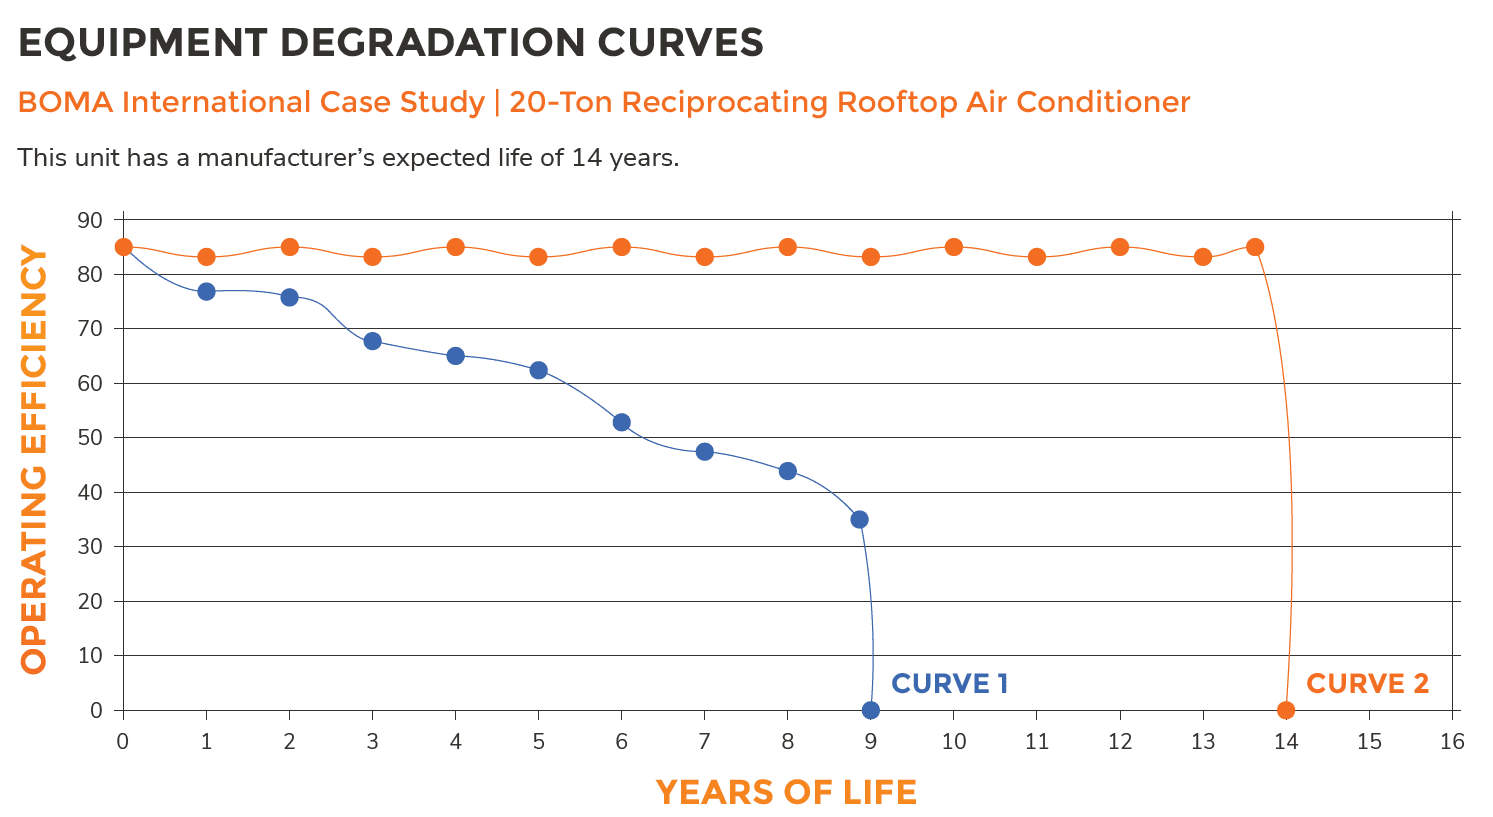 BOMA Equipment Degradation Curves